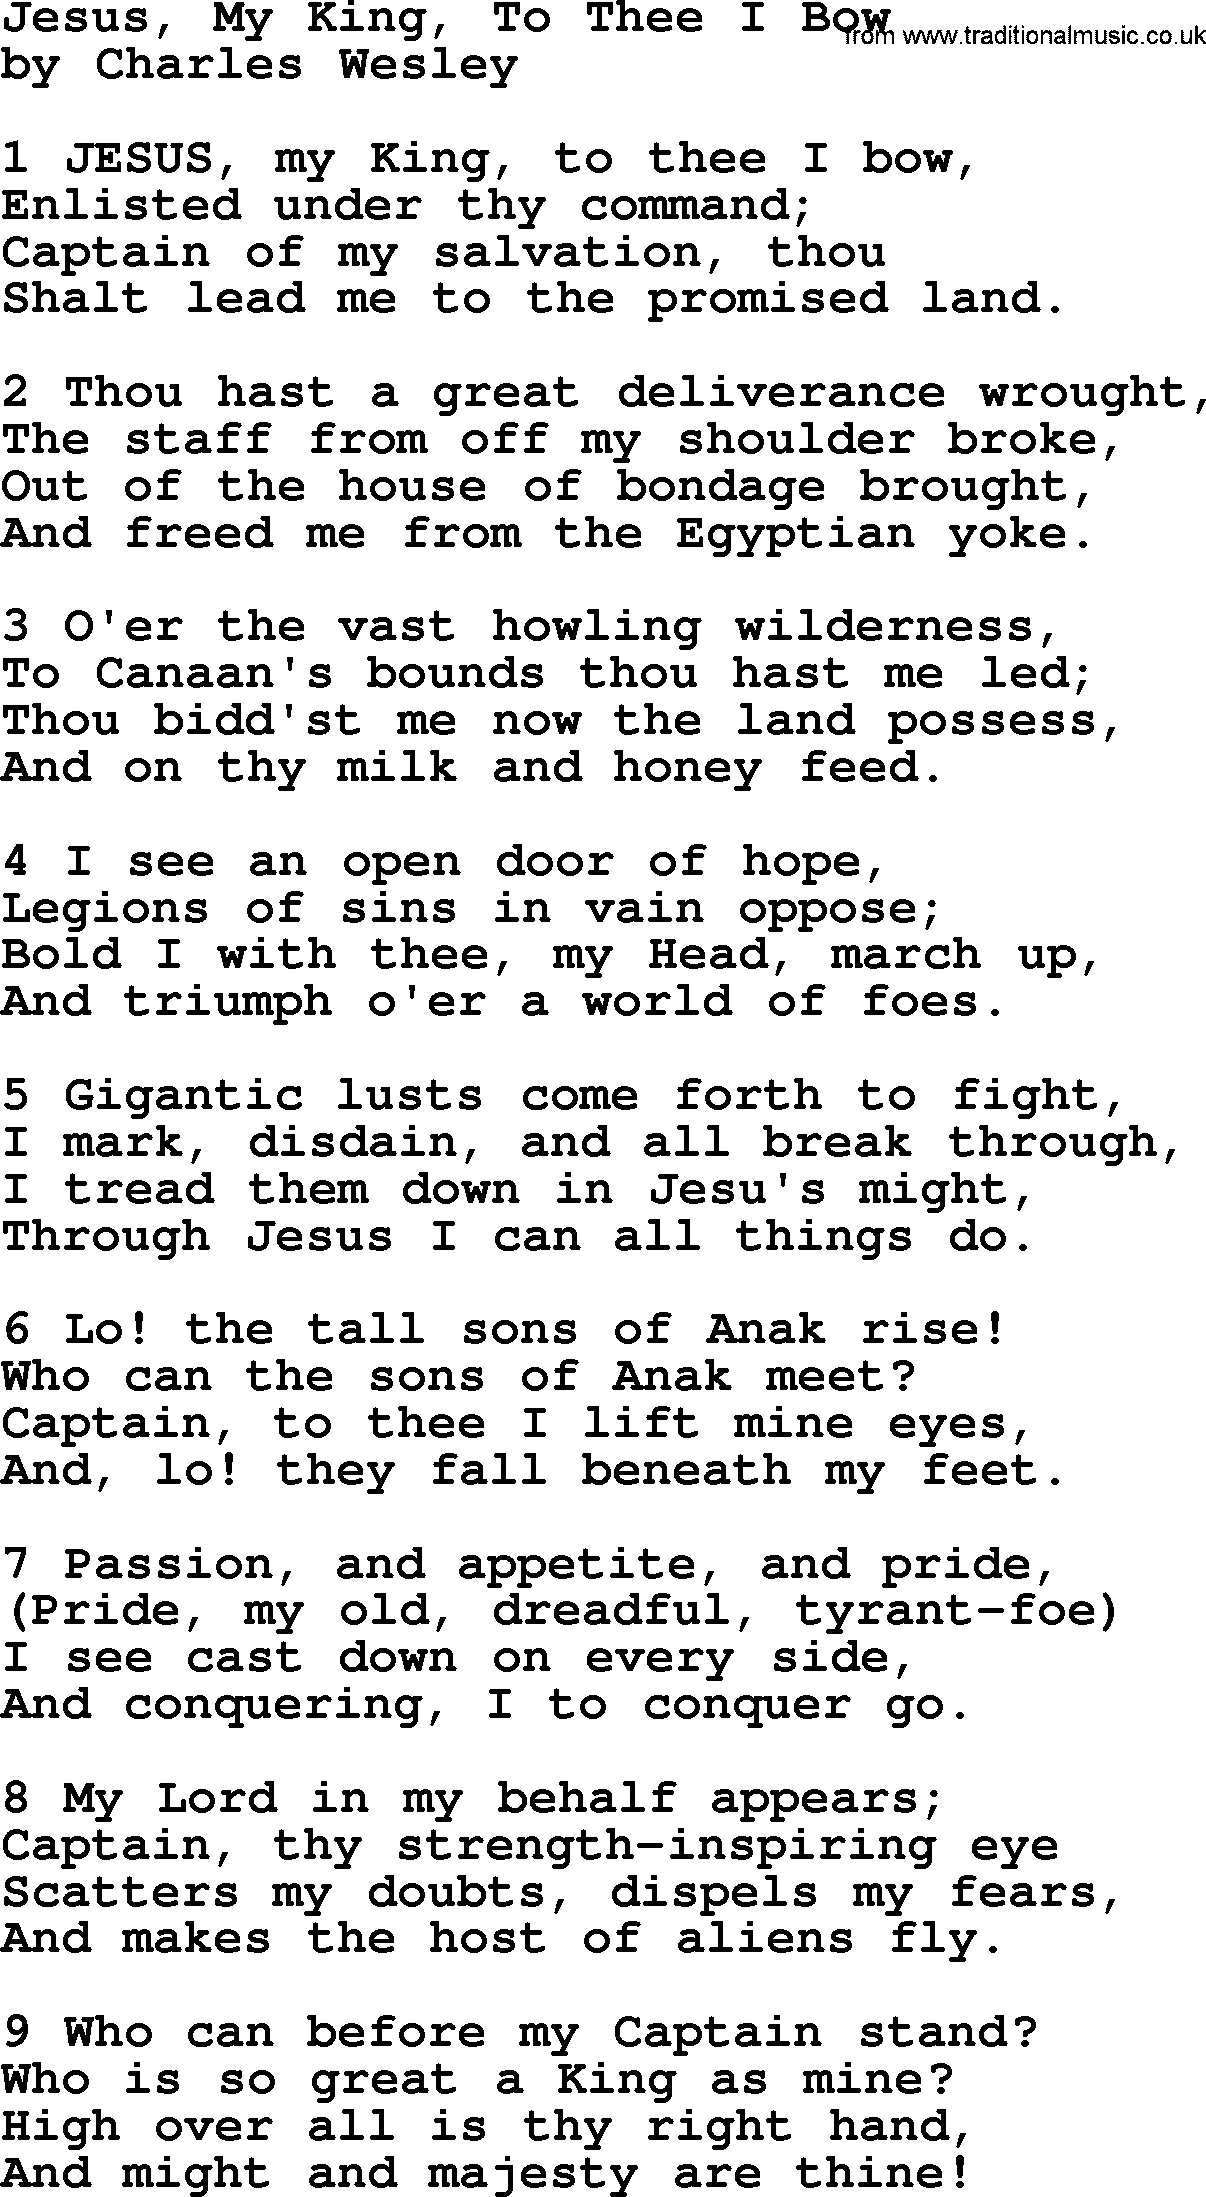 Charles Wesley hymn: Jesus, My King, To Thee I Bow, lyrics